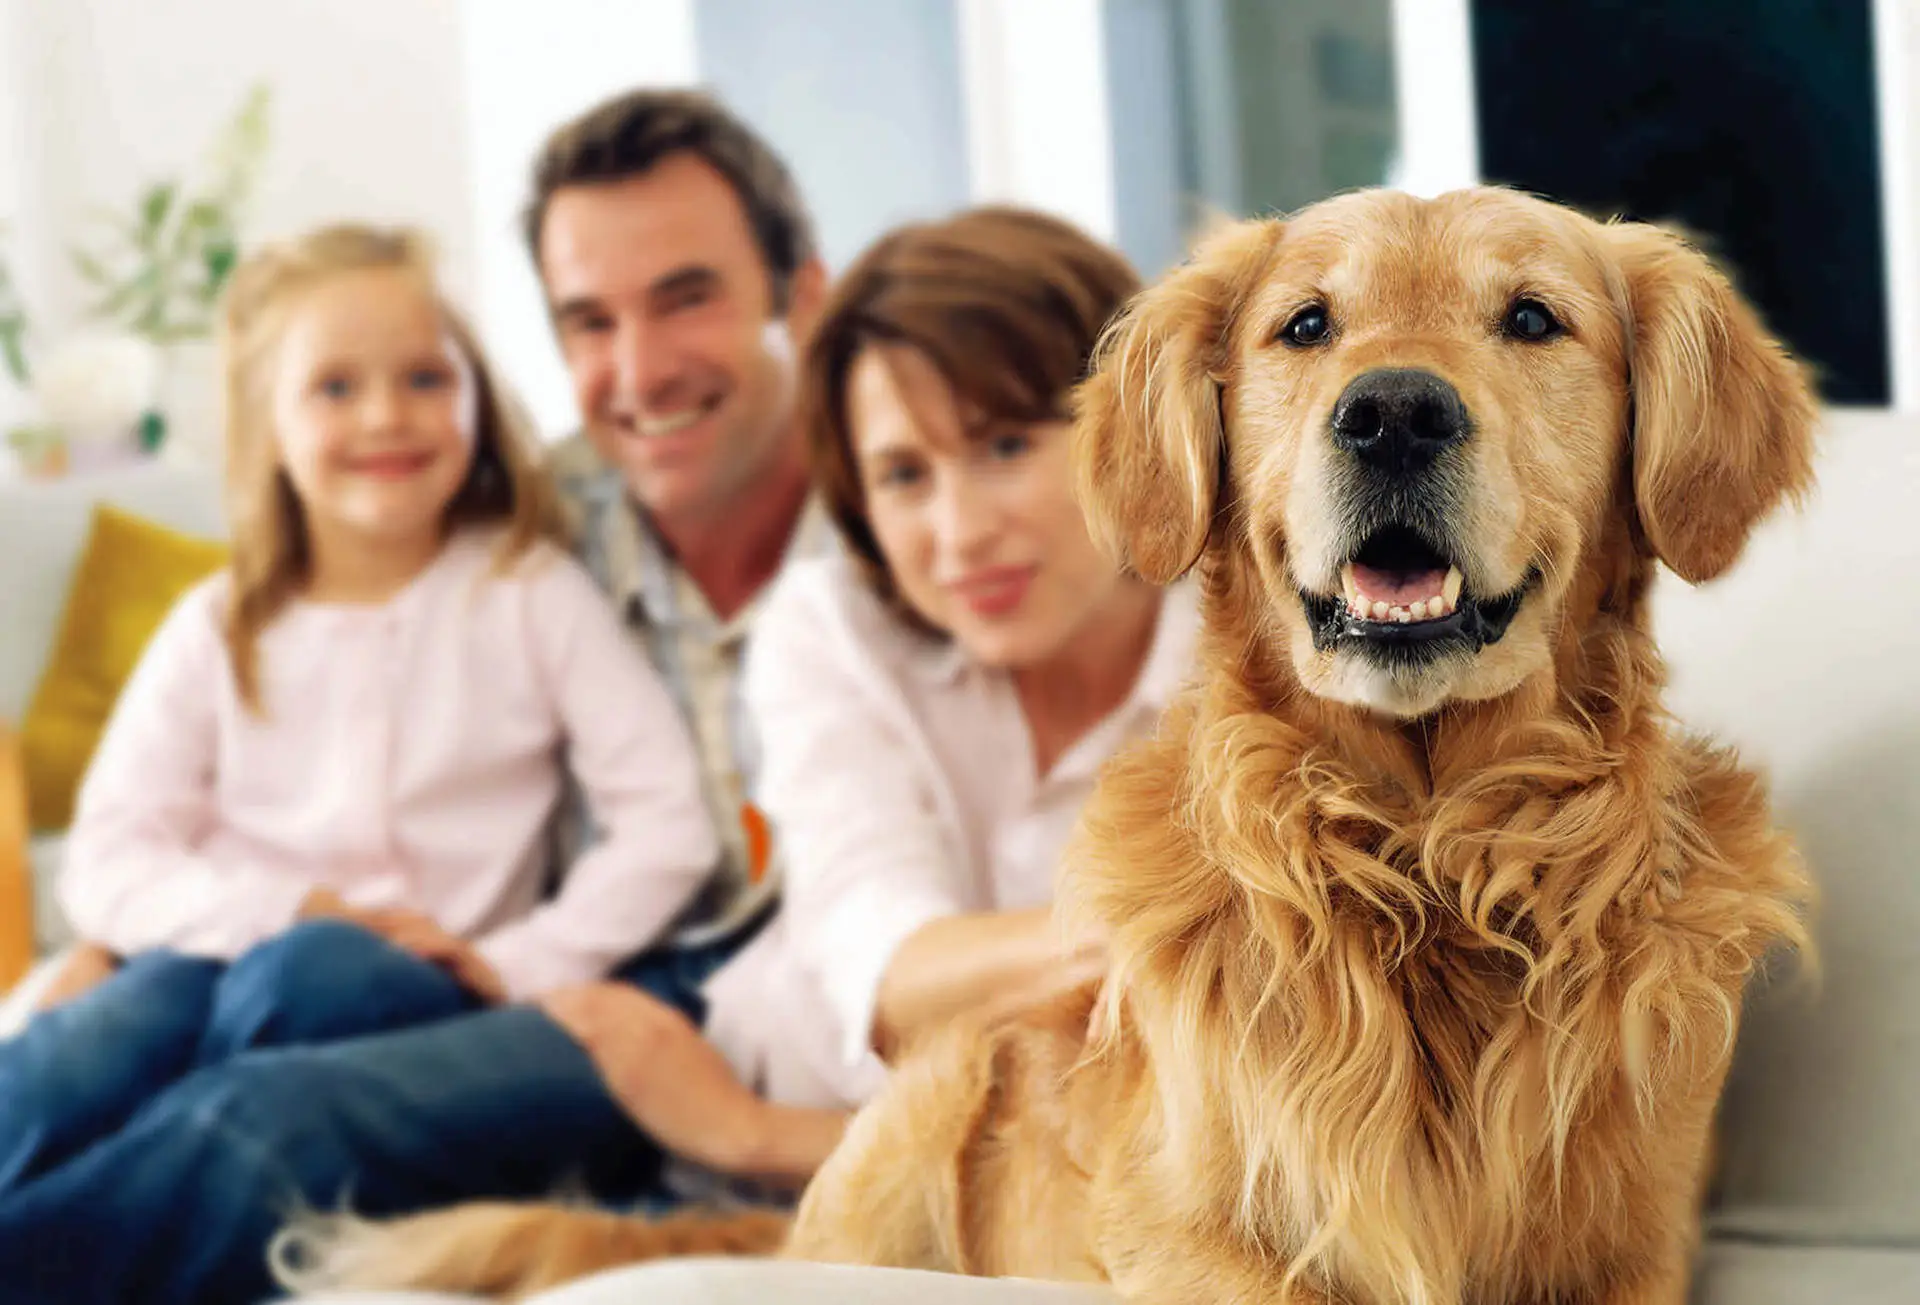 Dog, Dog Grooming, Pet Grooming, Pet Insurance, Insurance, Pet Grooming Tools, Dog Insurance